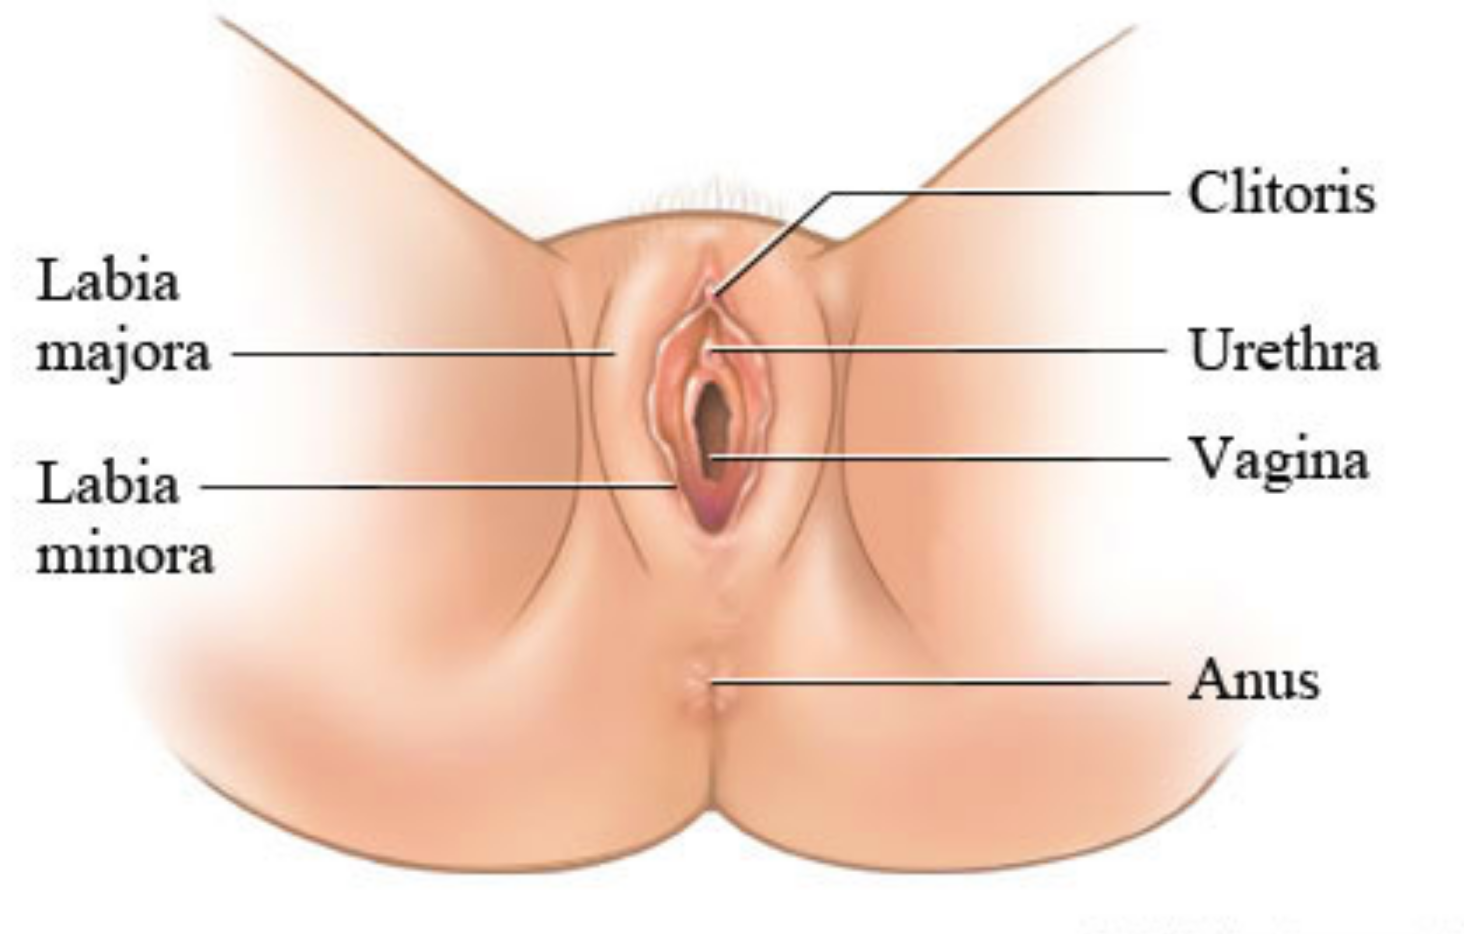 размер клитора влияет на оргазм фото 35